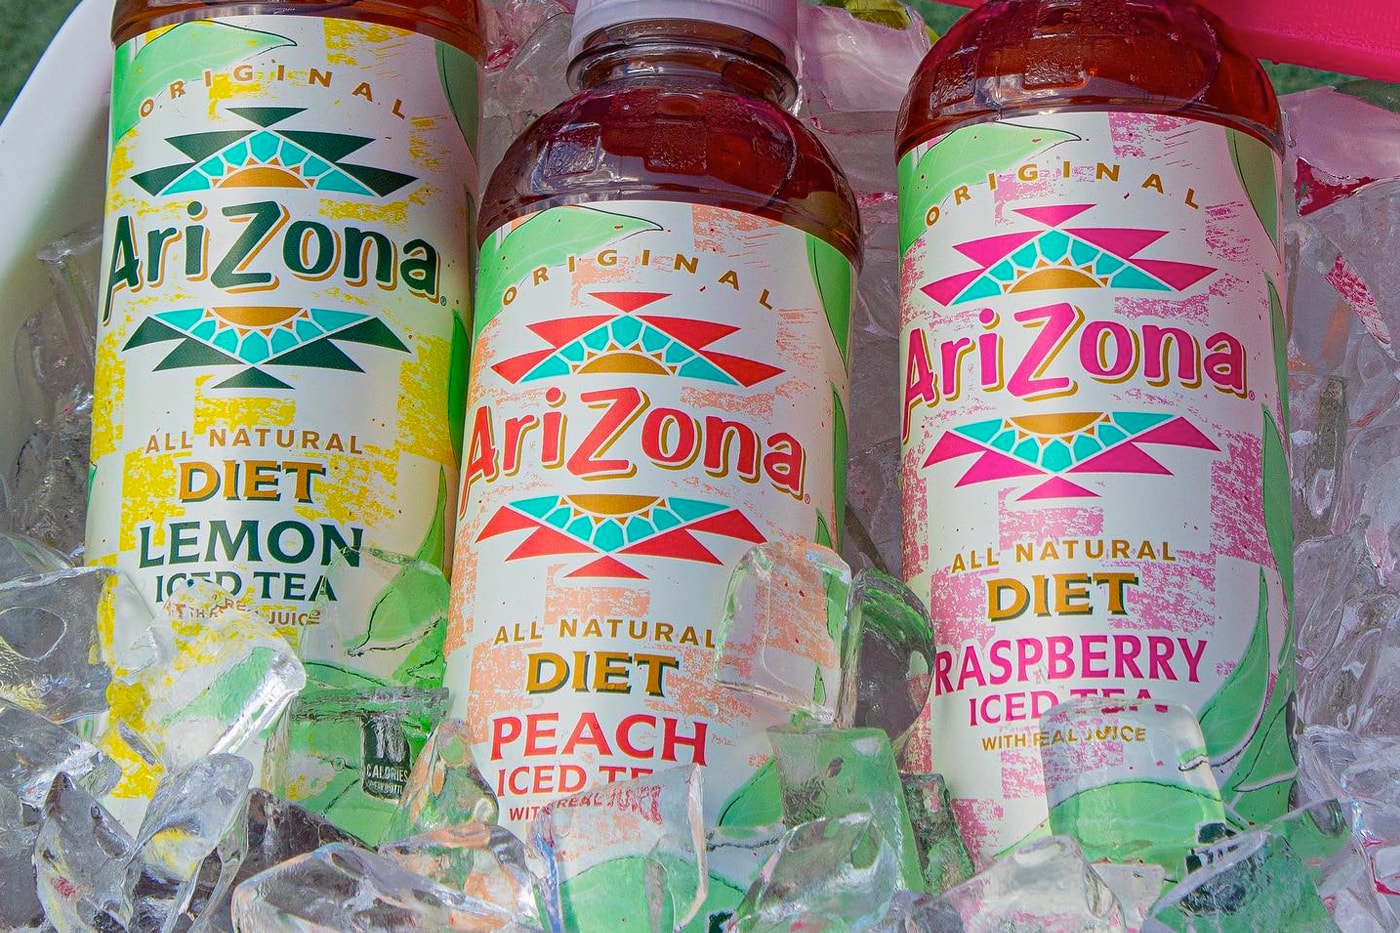 AriZona Iced Tea Founder Says Cans Will Stay $0.99 USD | Hypebeast